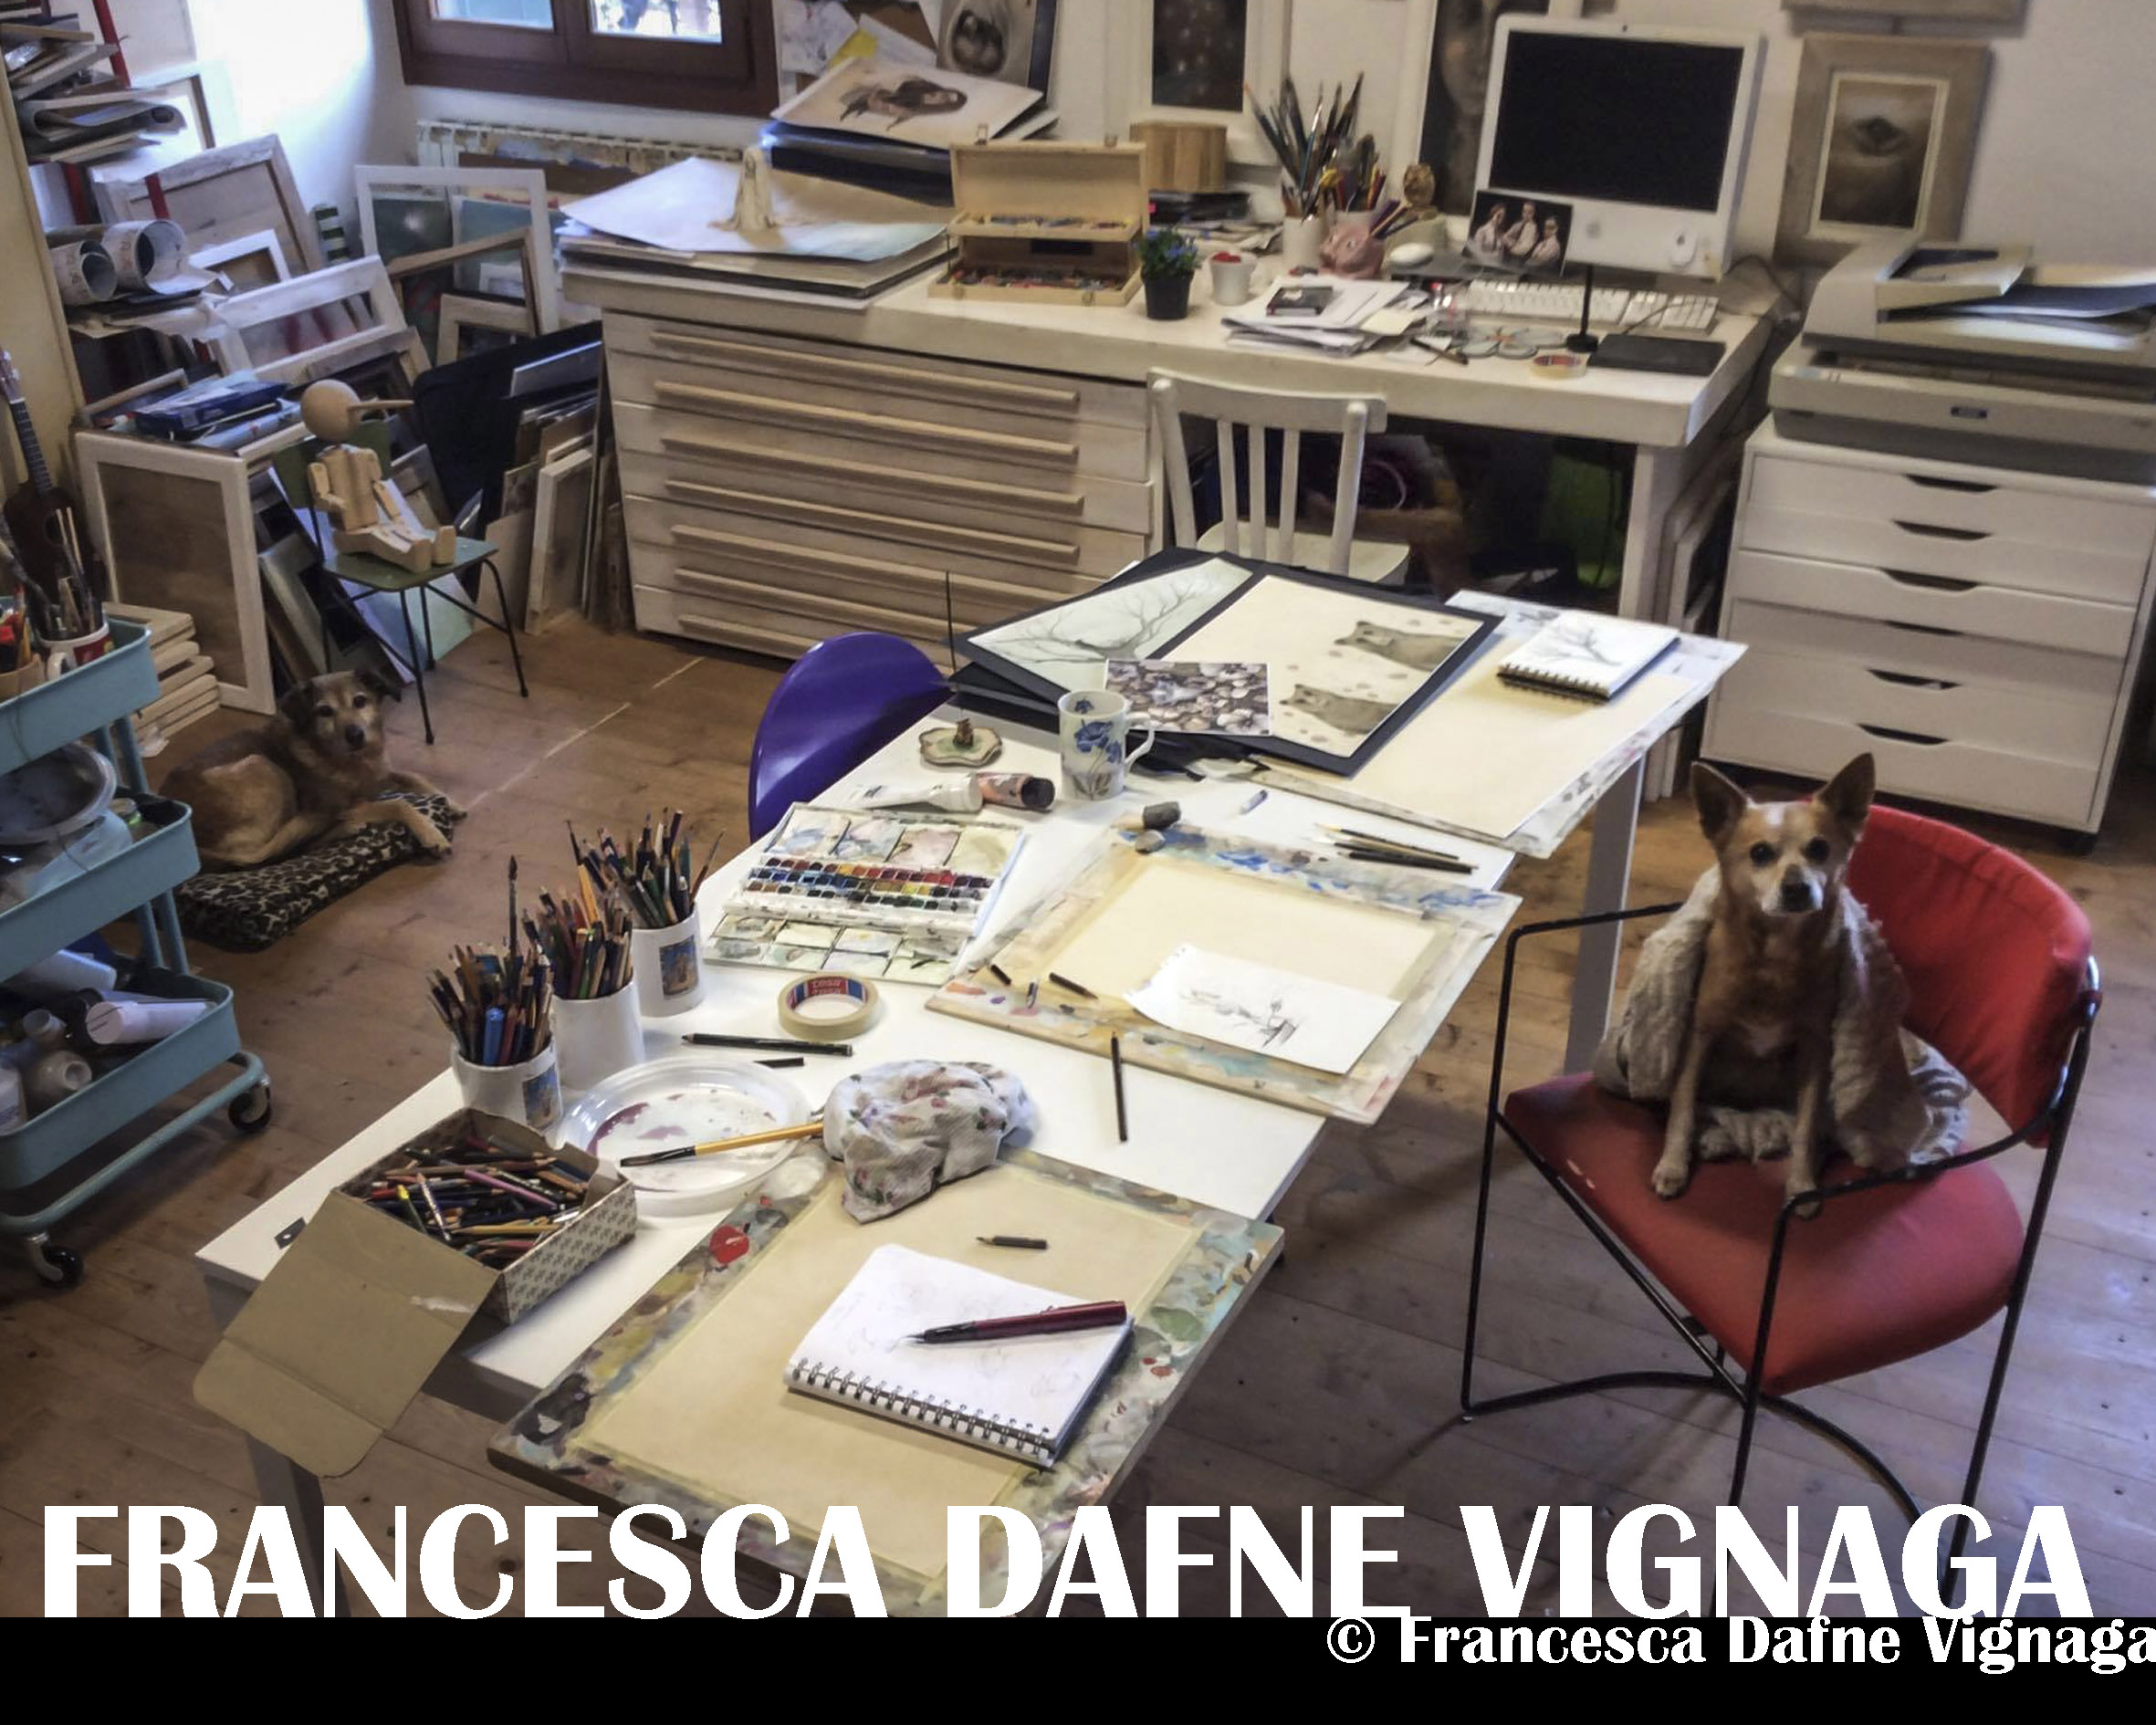 Francesca Dafne Vignaga